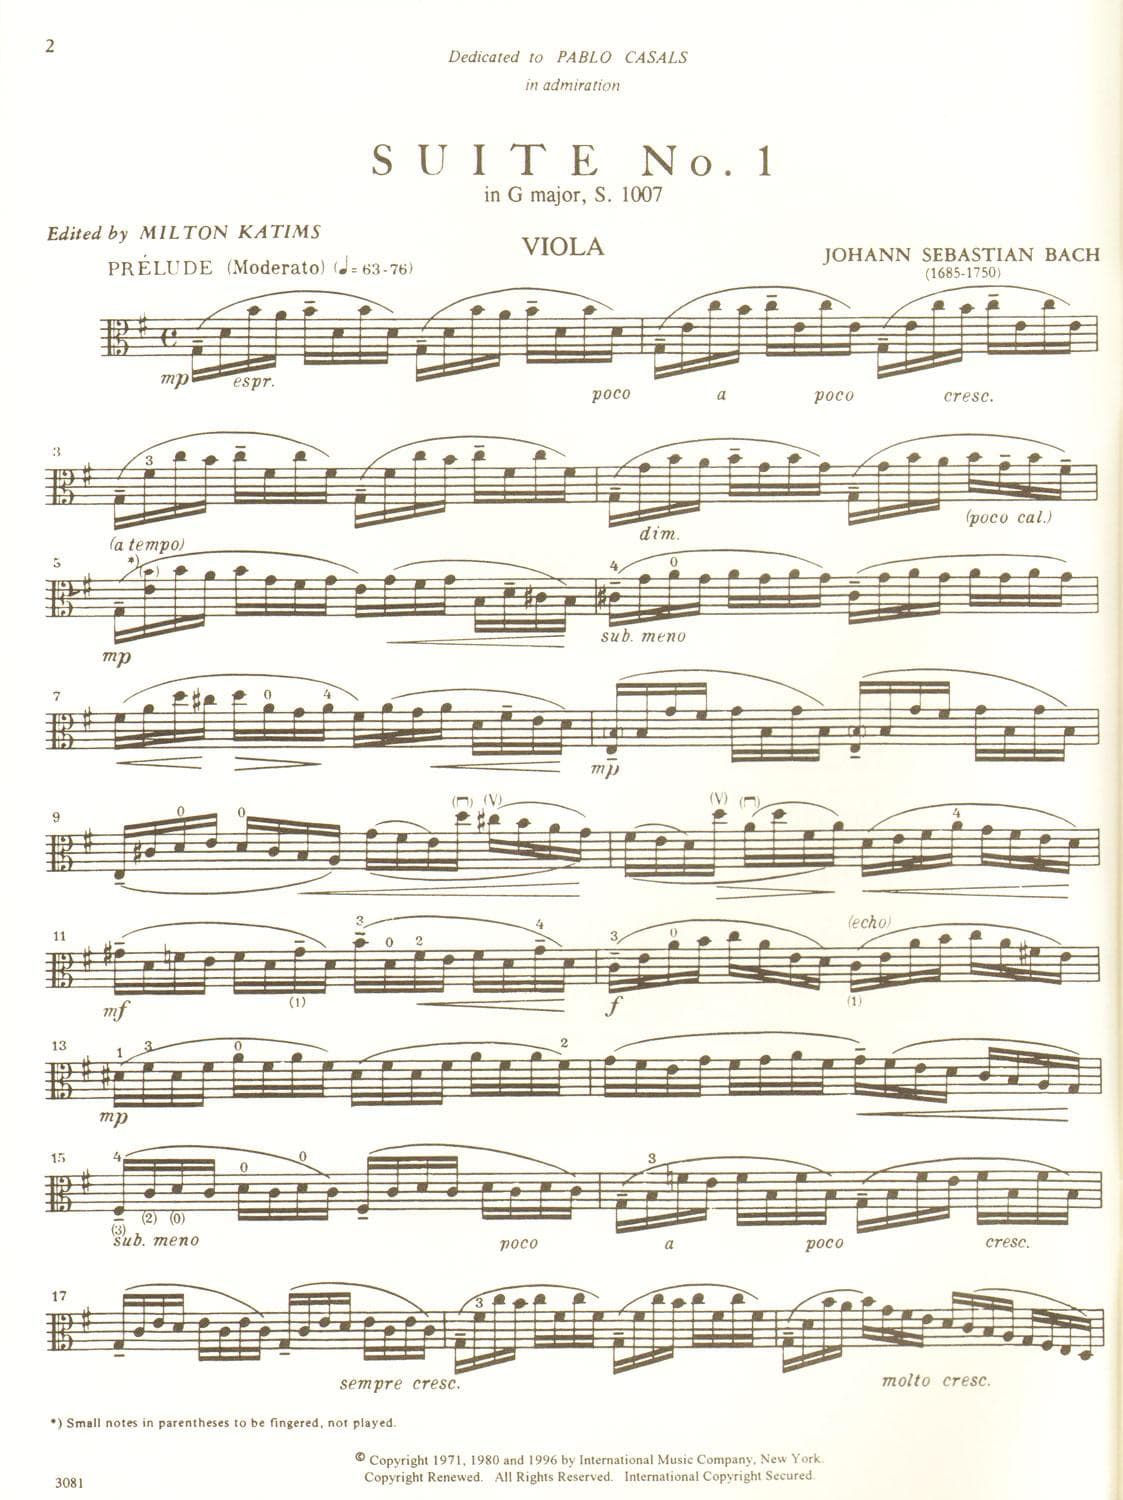 Bach, JS - 6 Cello Suites, BWV 1007-1012 - Viola solo - arranged by Milton Katims - International Music Company